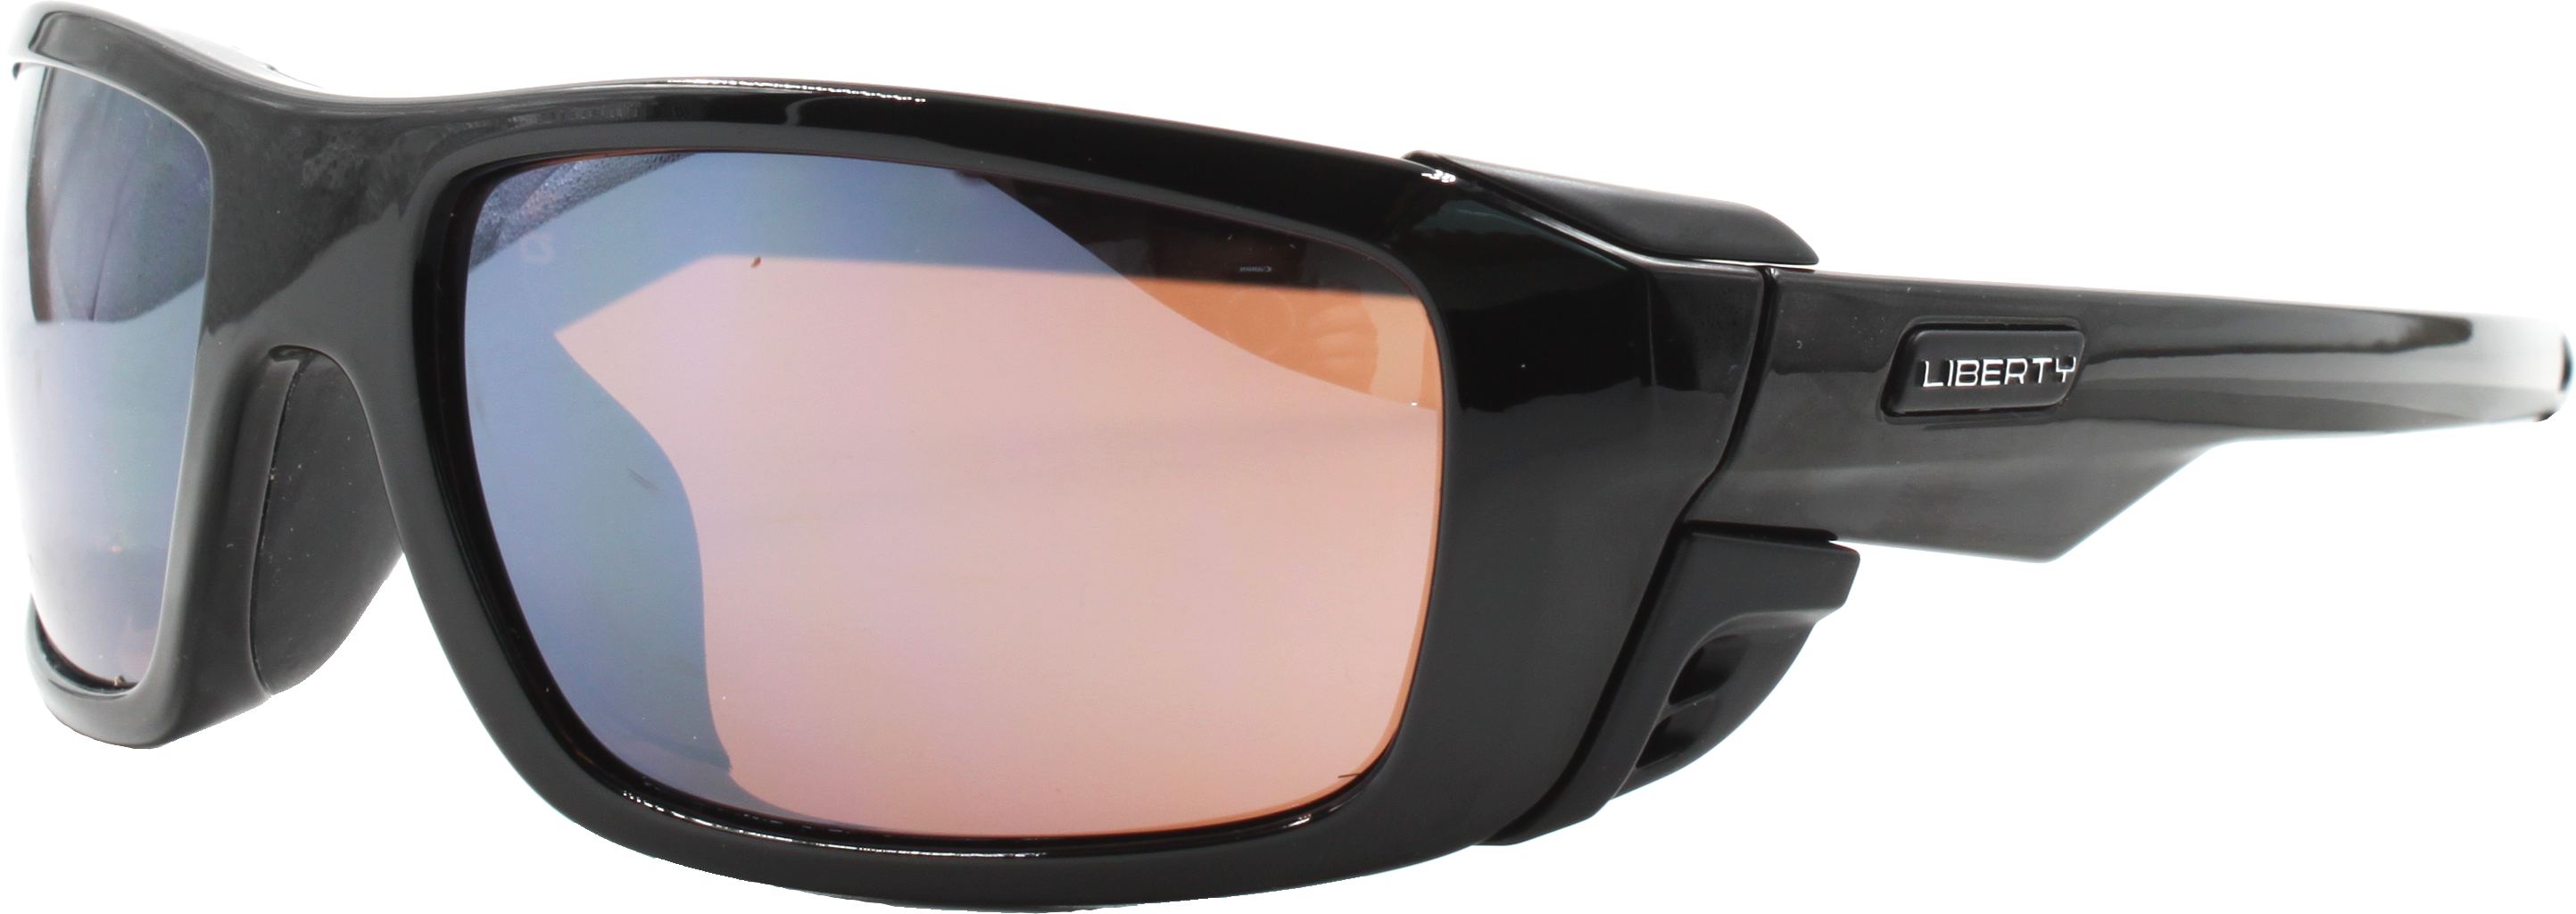 LS Rec-Specs Throttle Sunglasses